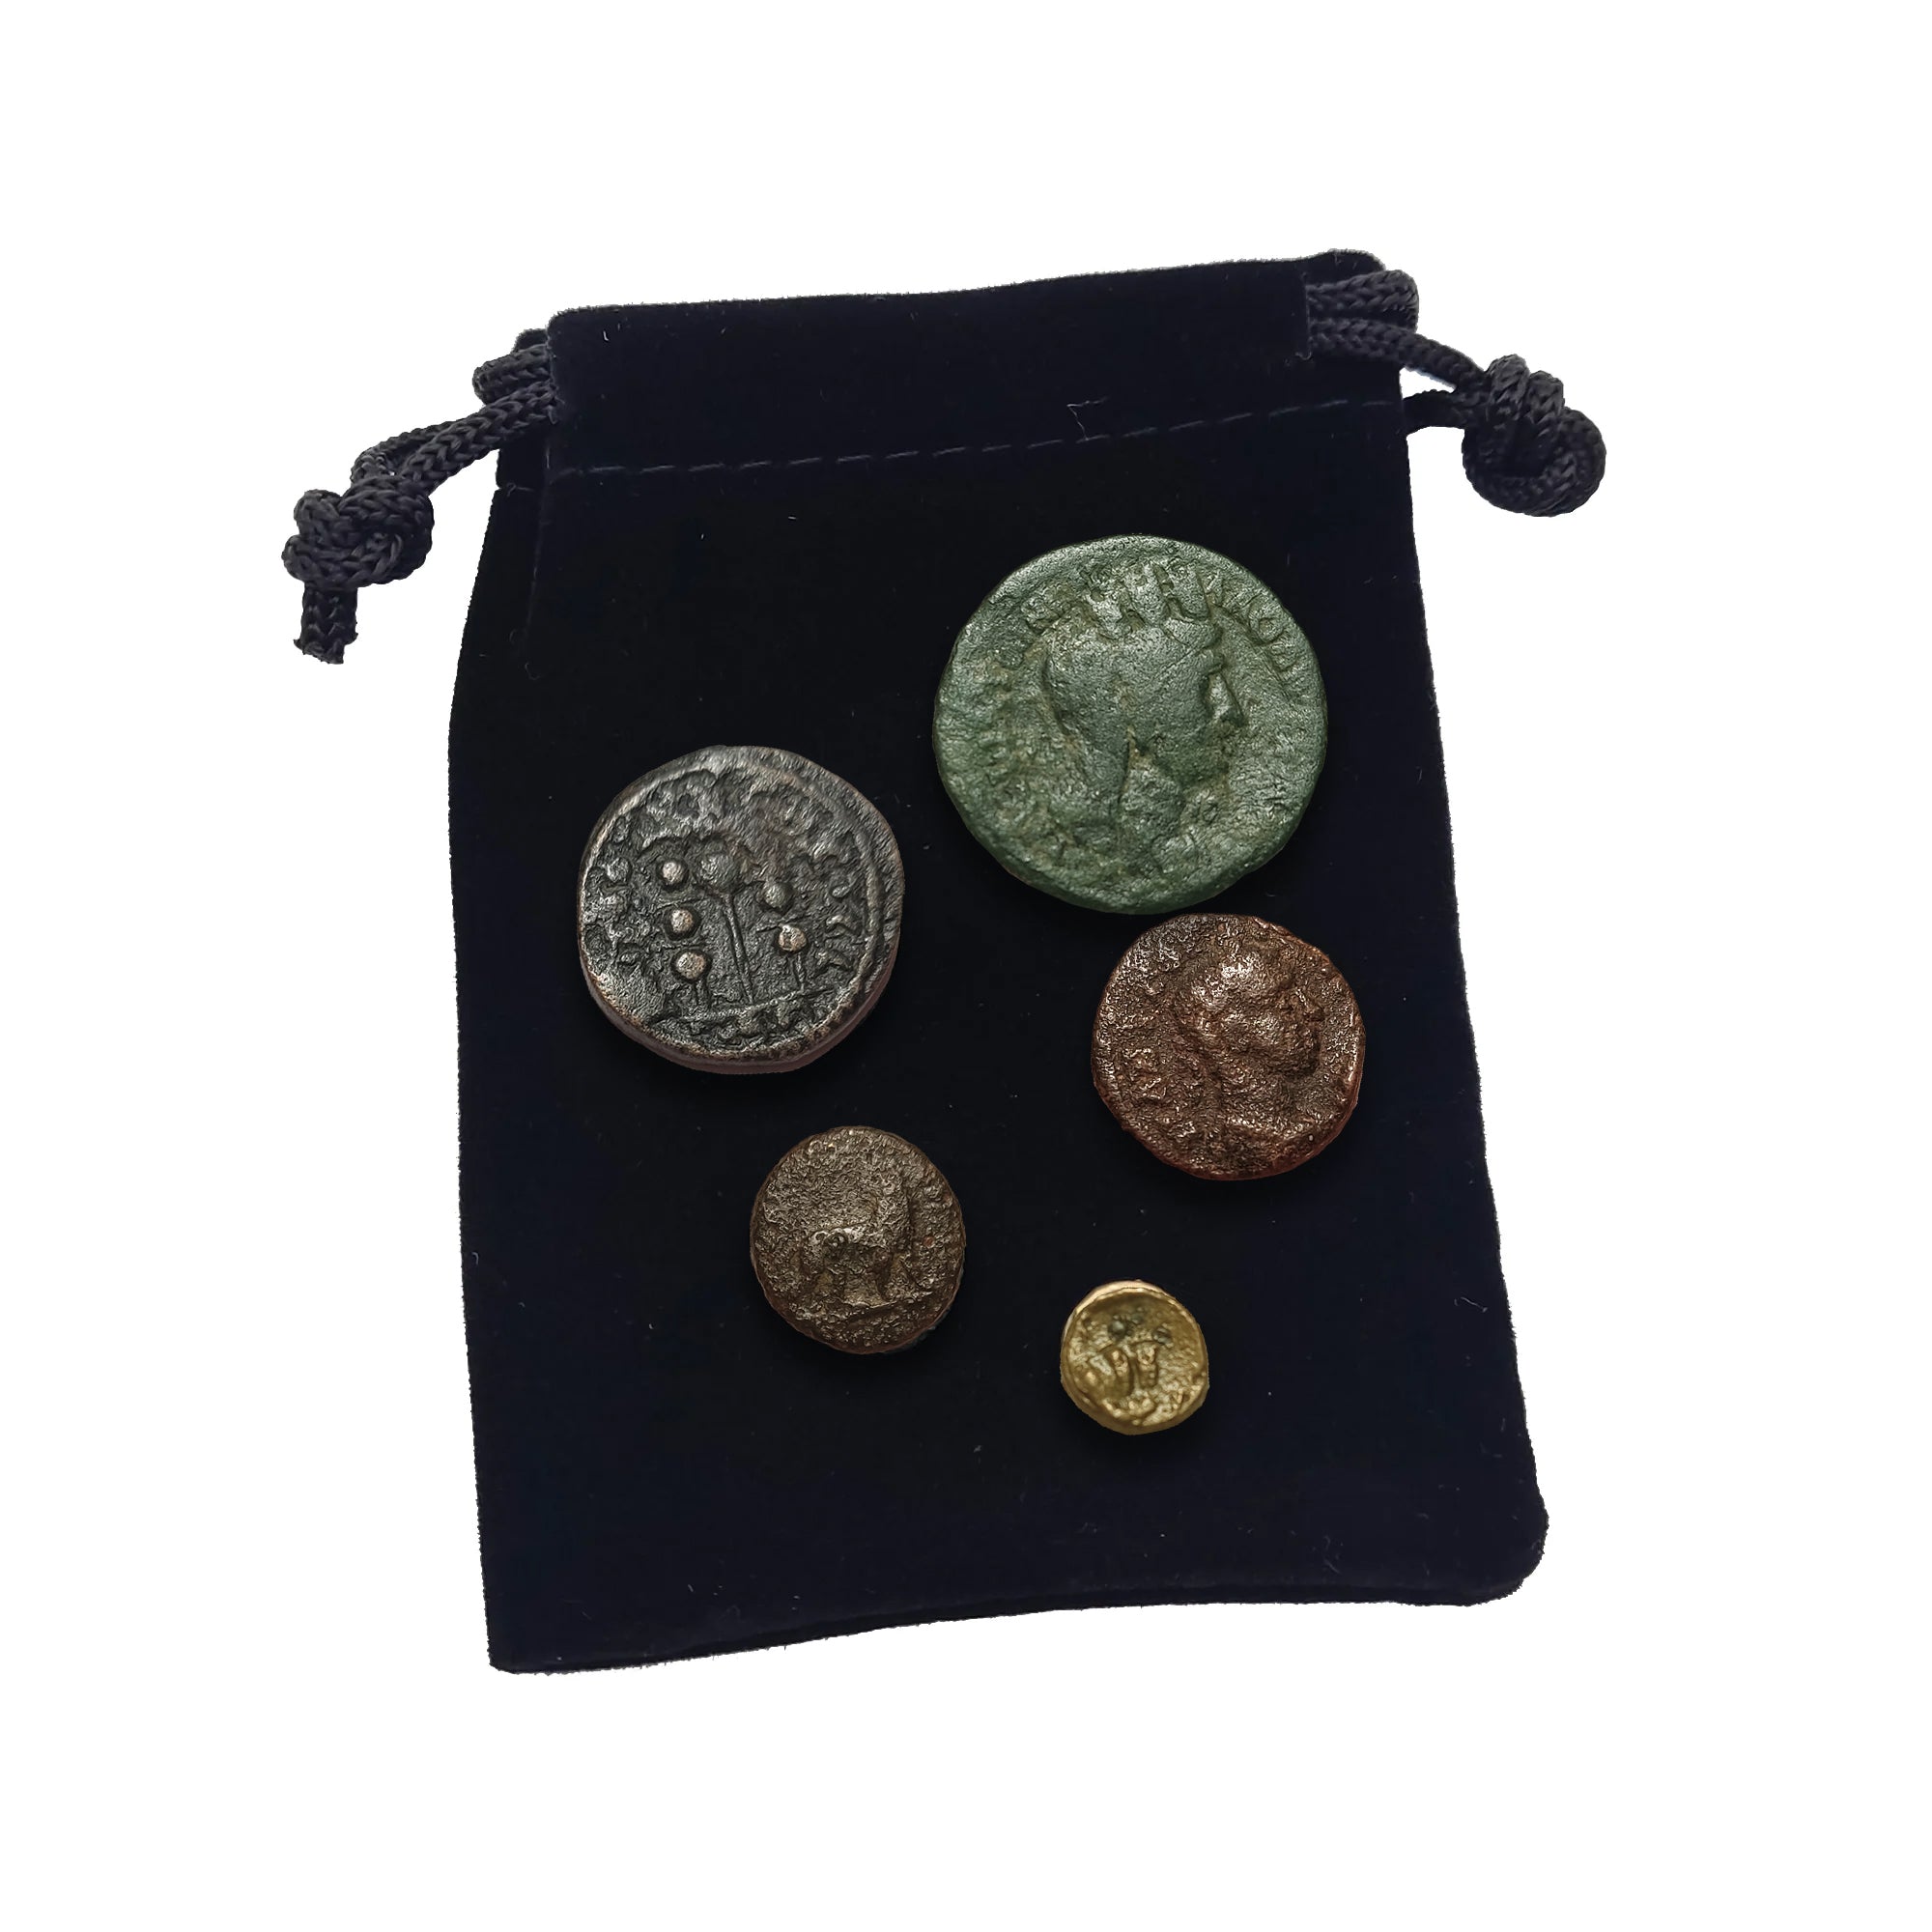 Amazon.com: 5 Original Imperial Roman Coins in a Coin Grab Bag - Rare Coins  of Emperors, Gods & Legions - Coins Collection : Collectibles & Fine Art